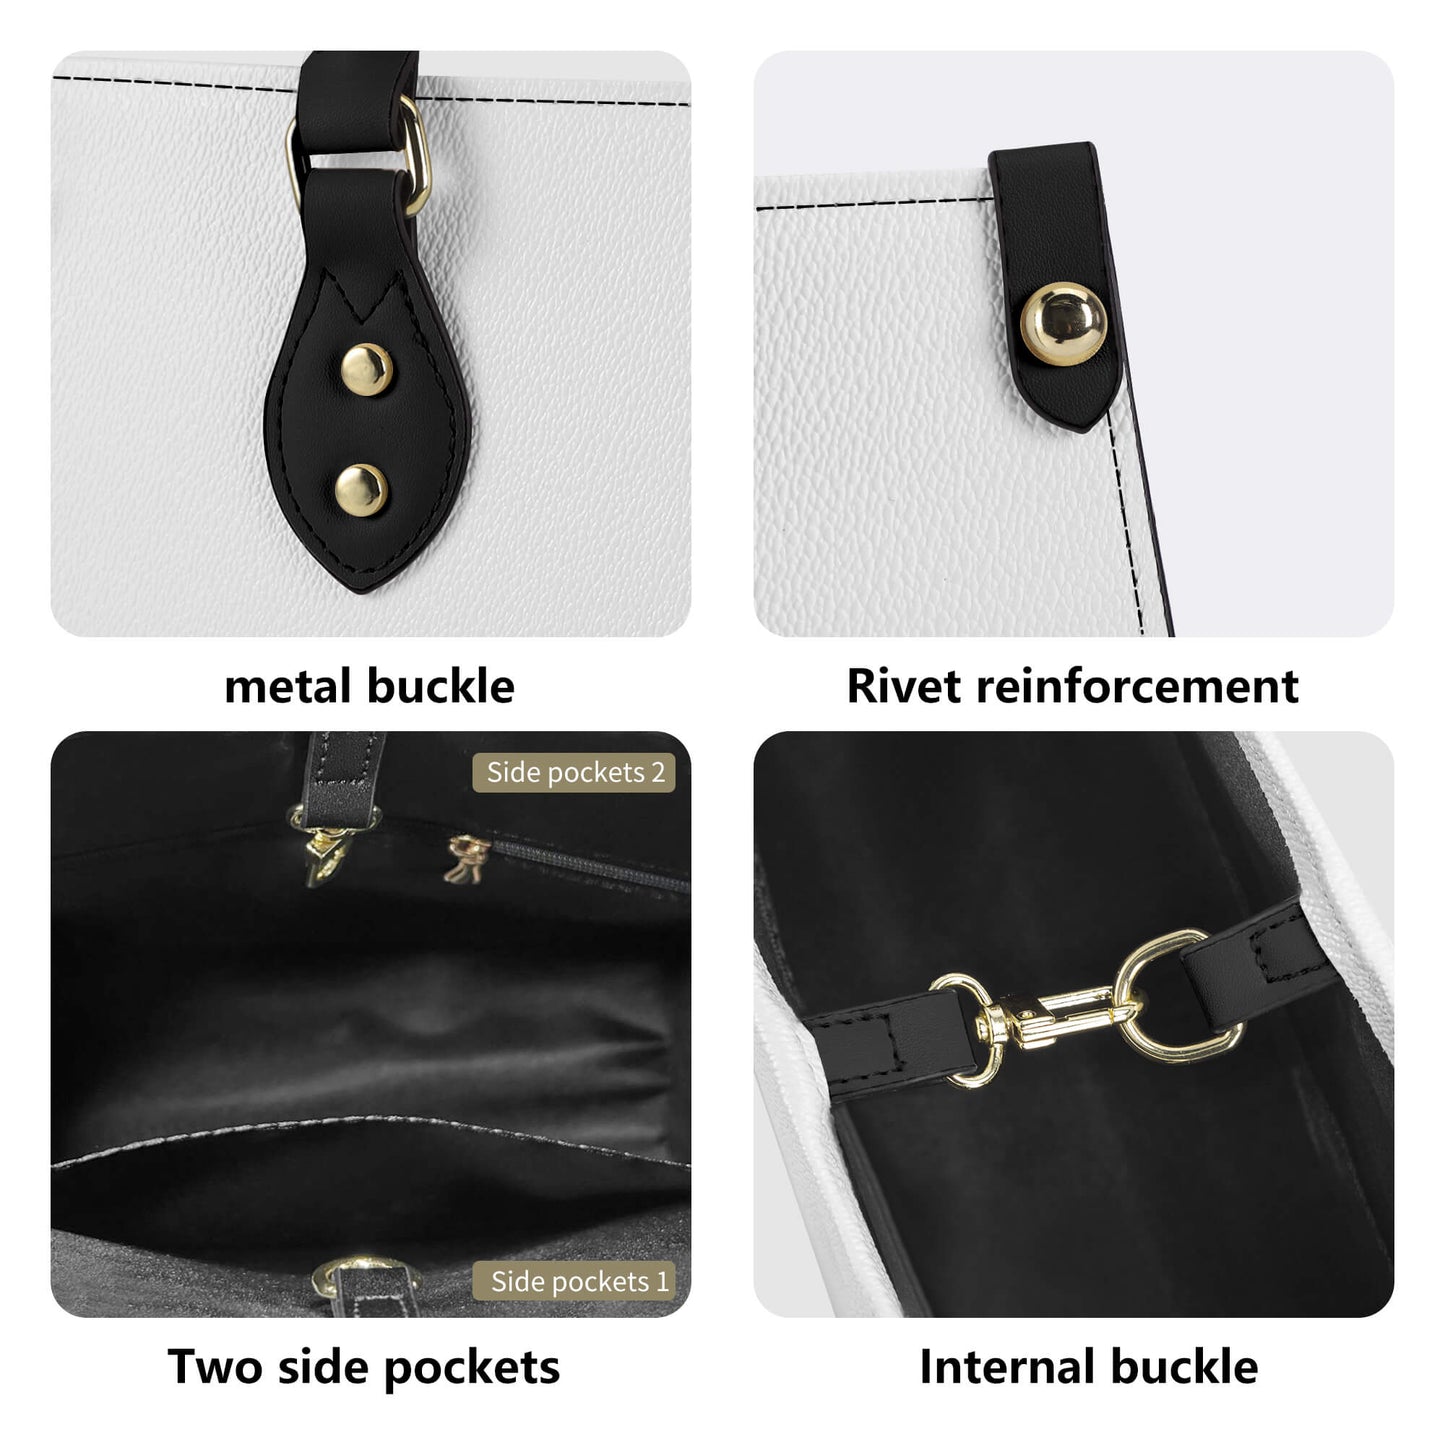 Kona - Luxury Women Handbag